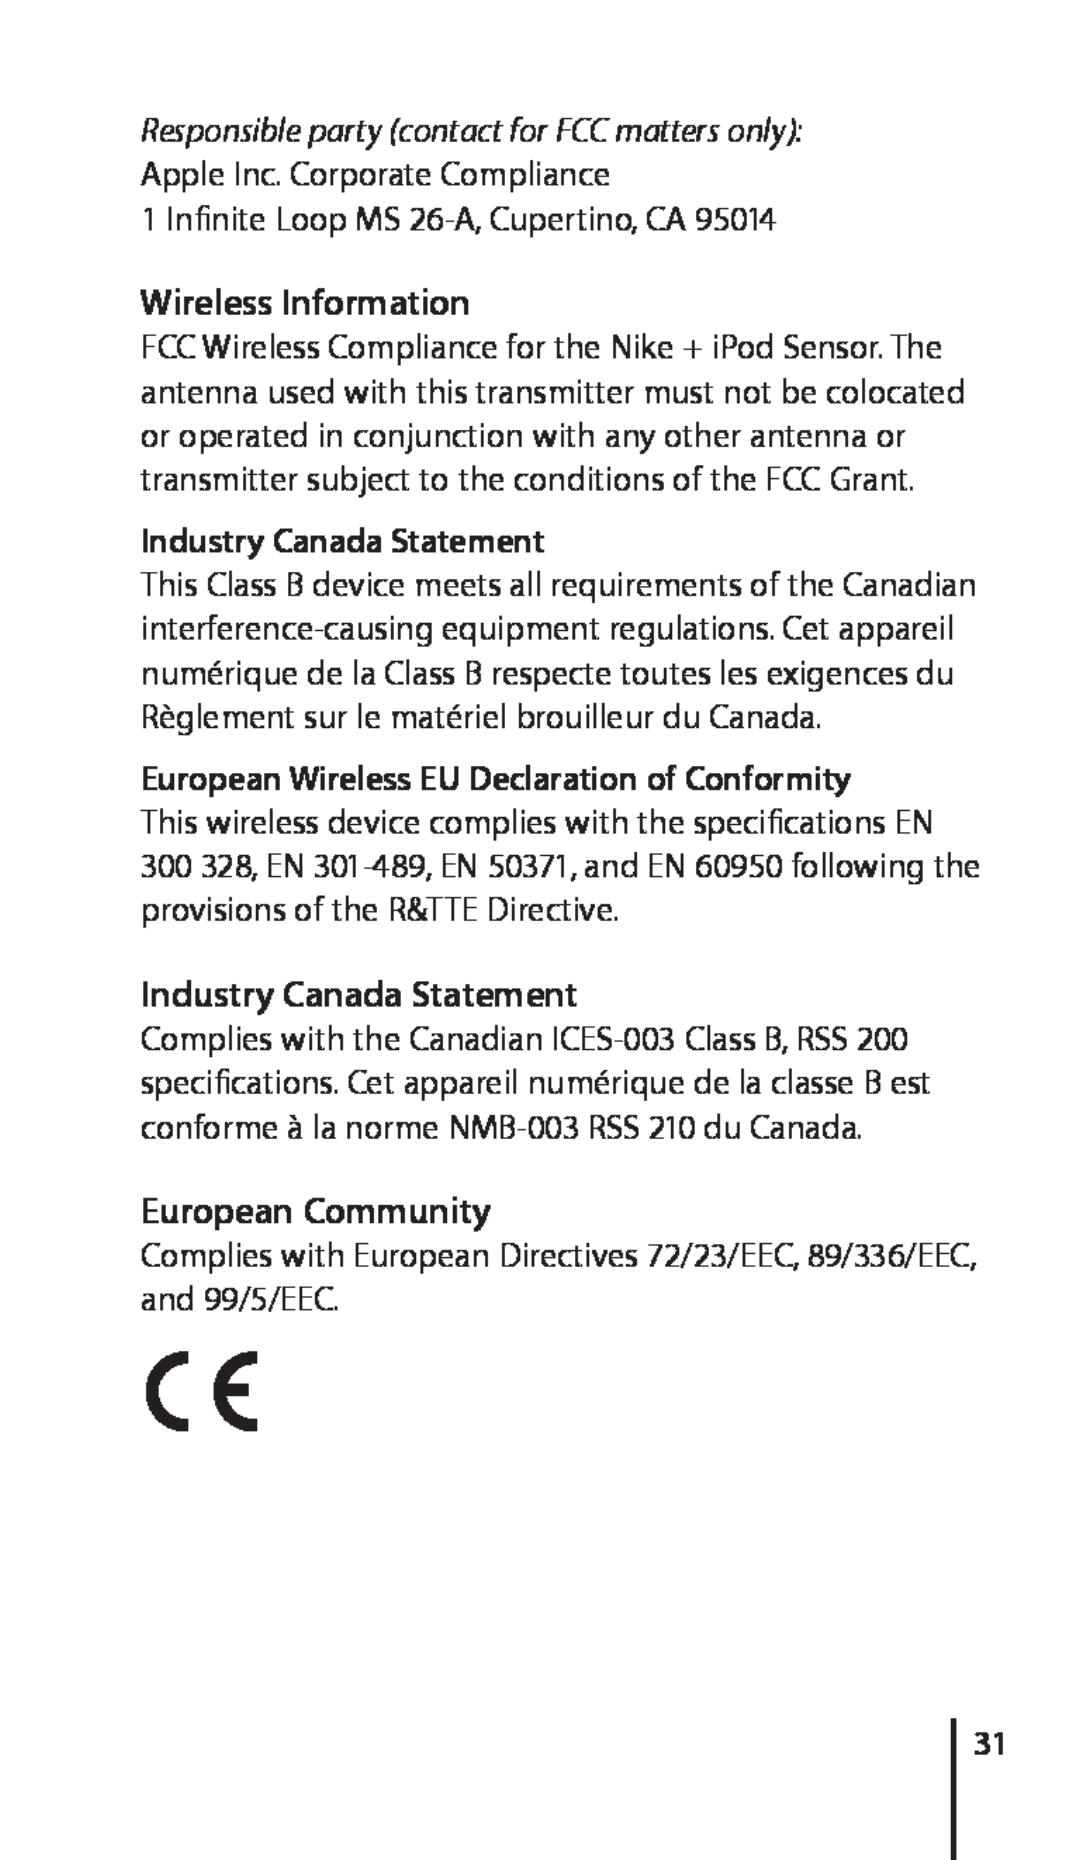 Apple 034-4945-A, Nike + iPod Sensor manual Wireless Information, Industry Canada Statement, European Community 